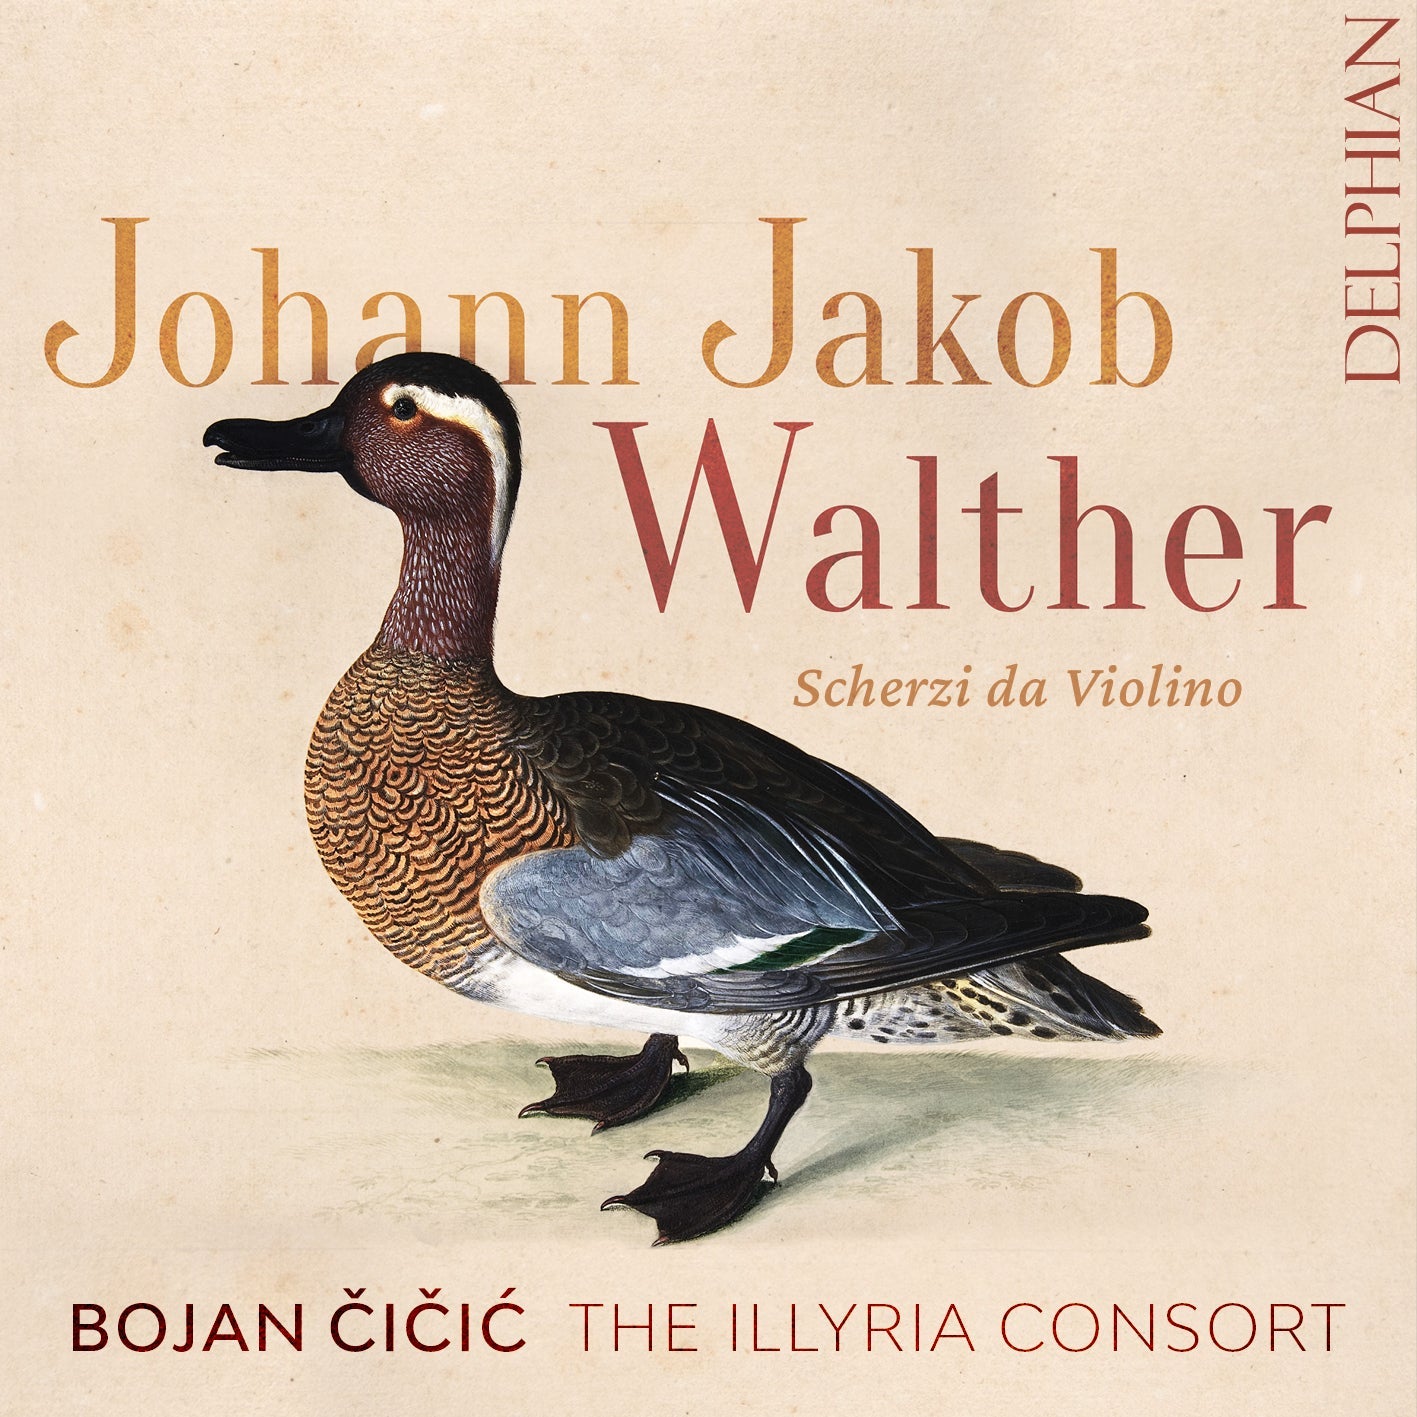 Johann Jakob Walther: Scherzi da violino (2 CDs) CD Delphian Records